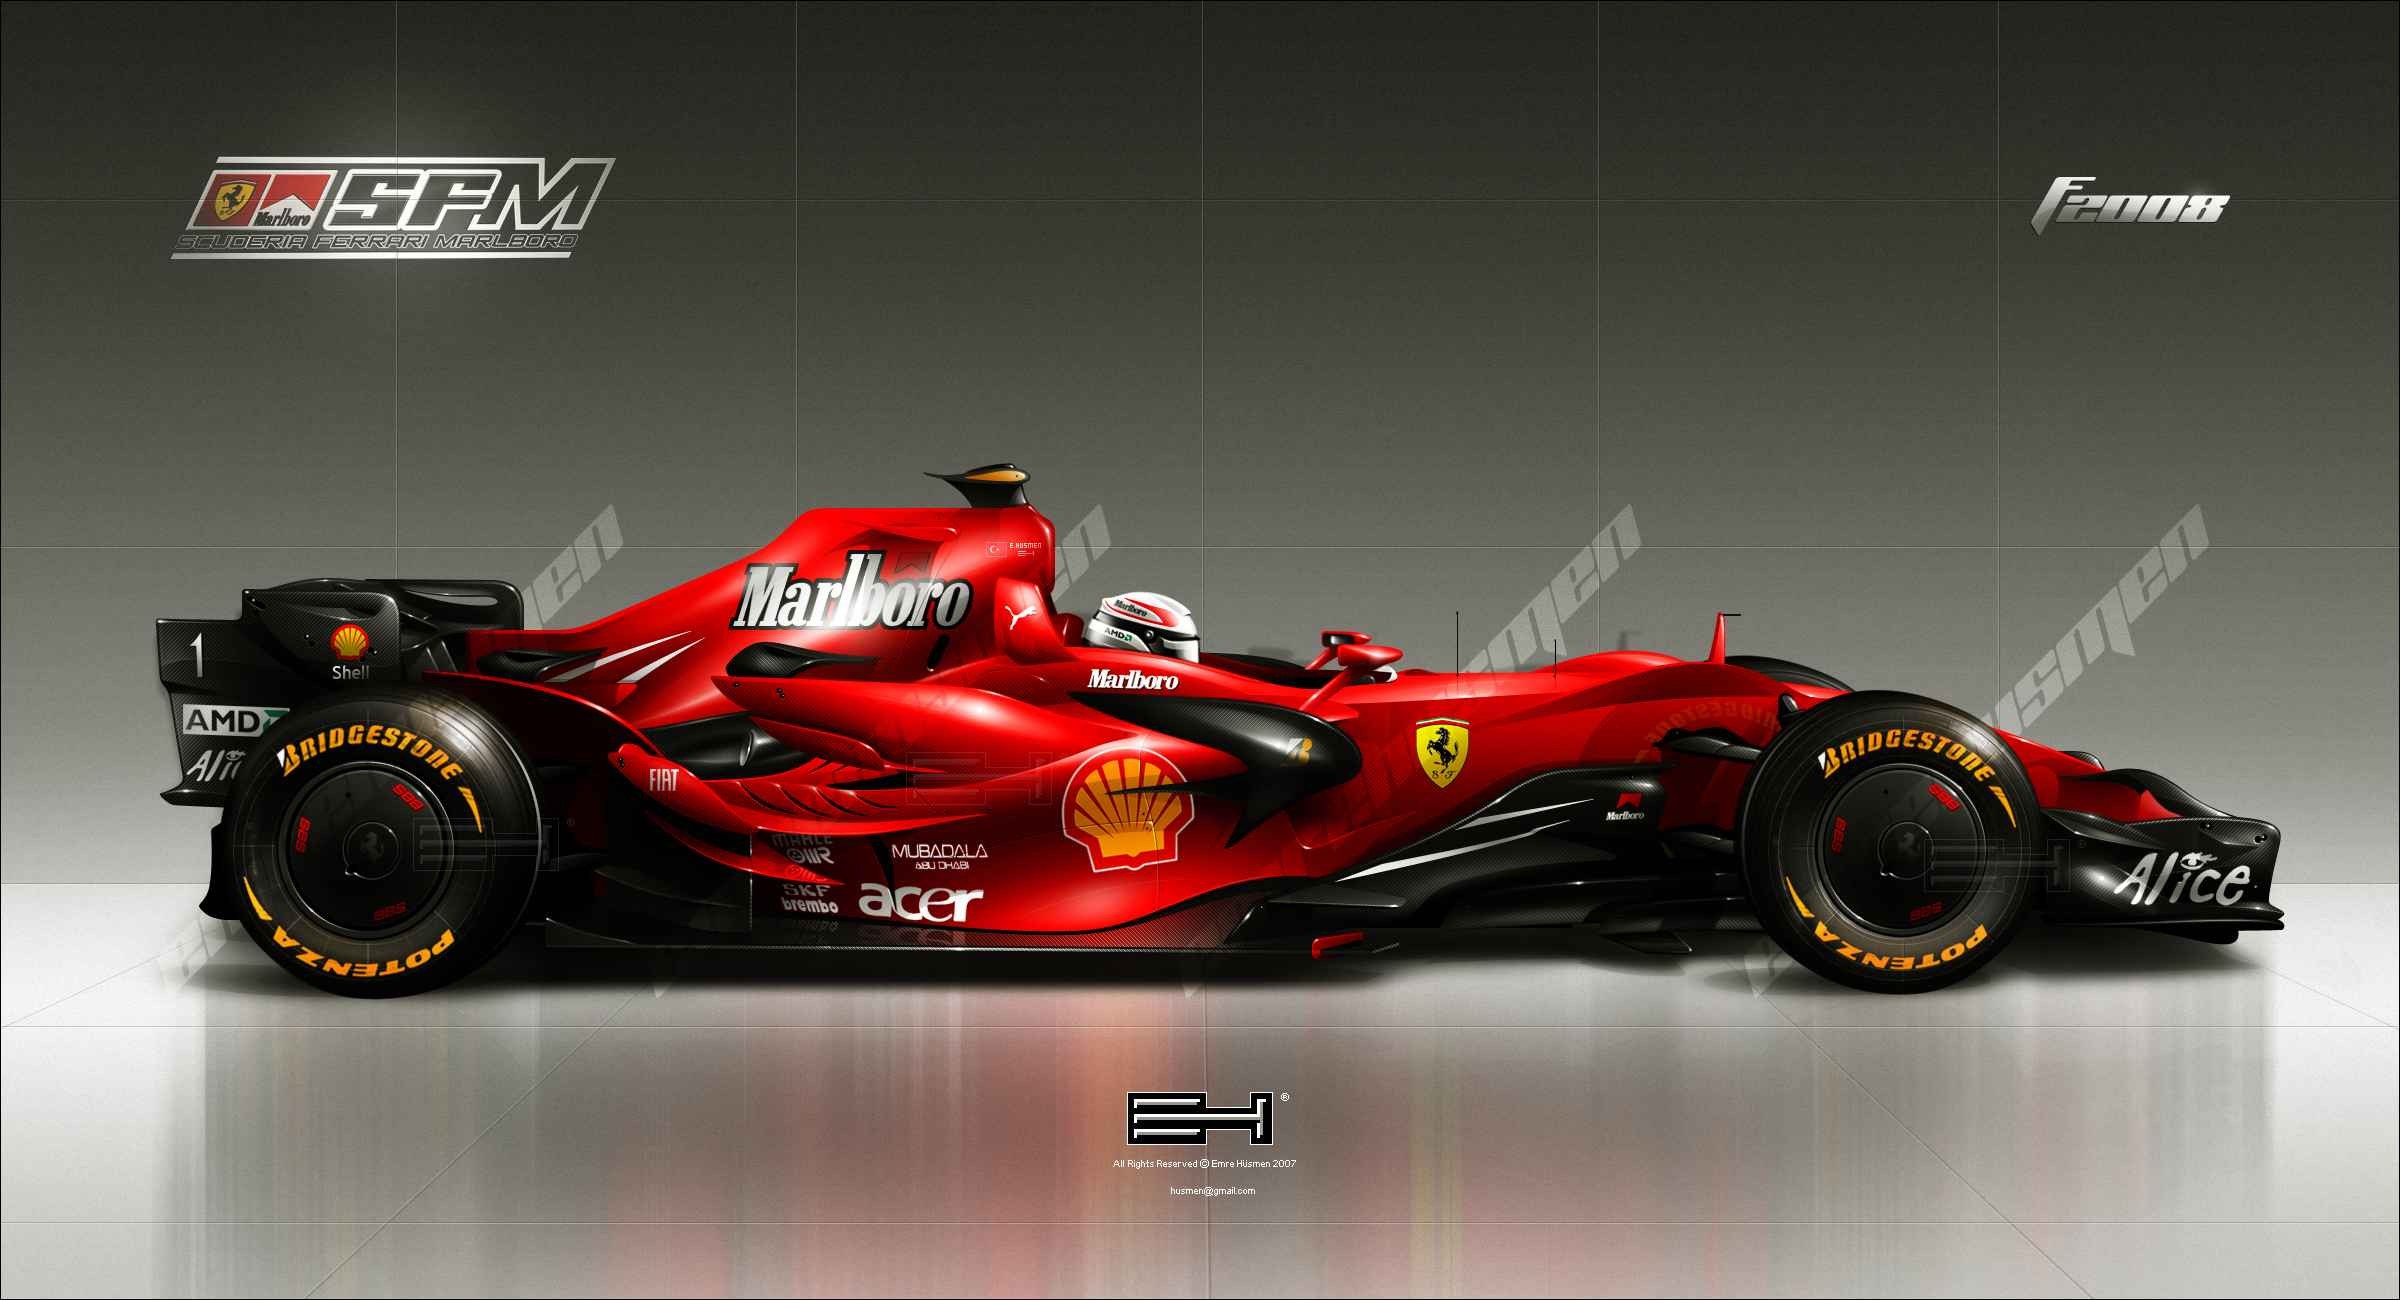 General 2400x1300 vehicle car 2008 (Year) race cars red cars motorsport sport Ferrari Formula 1